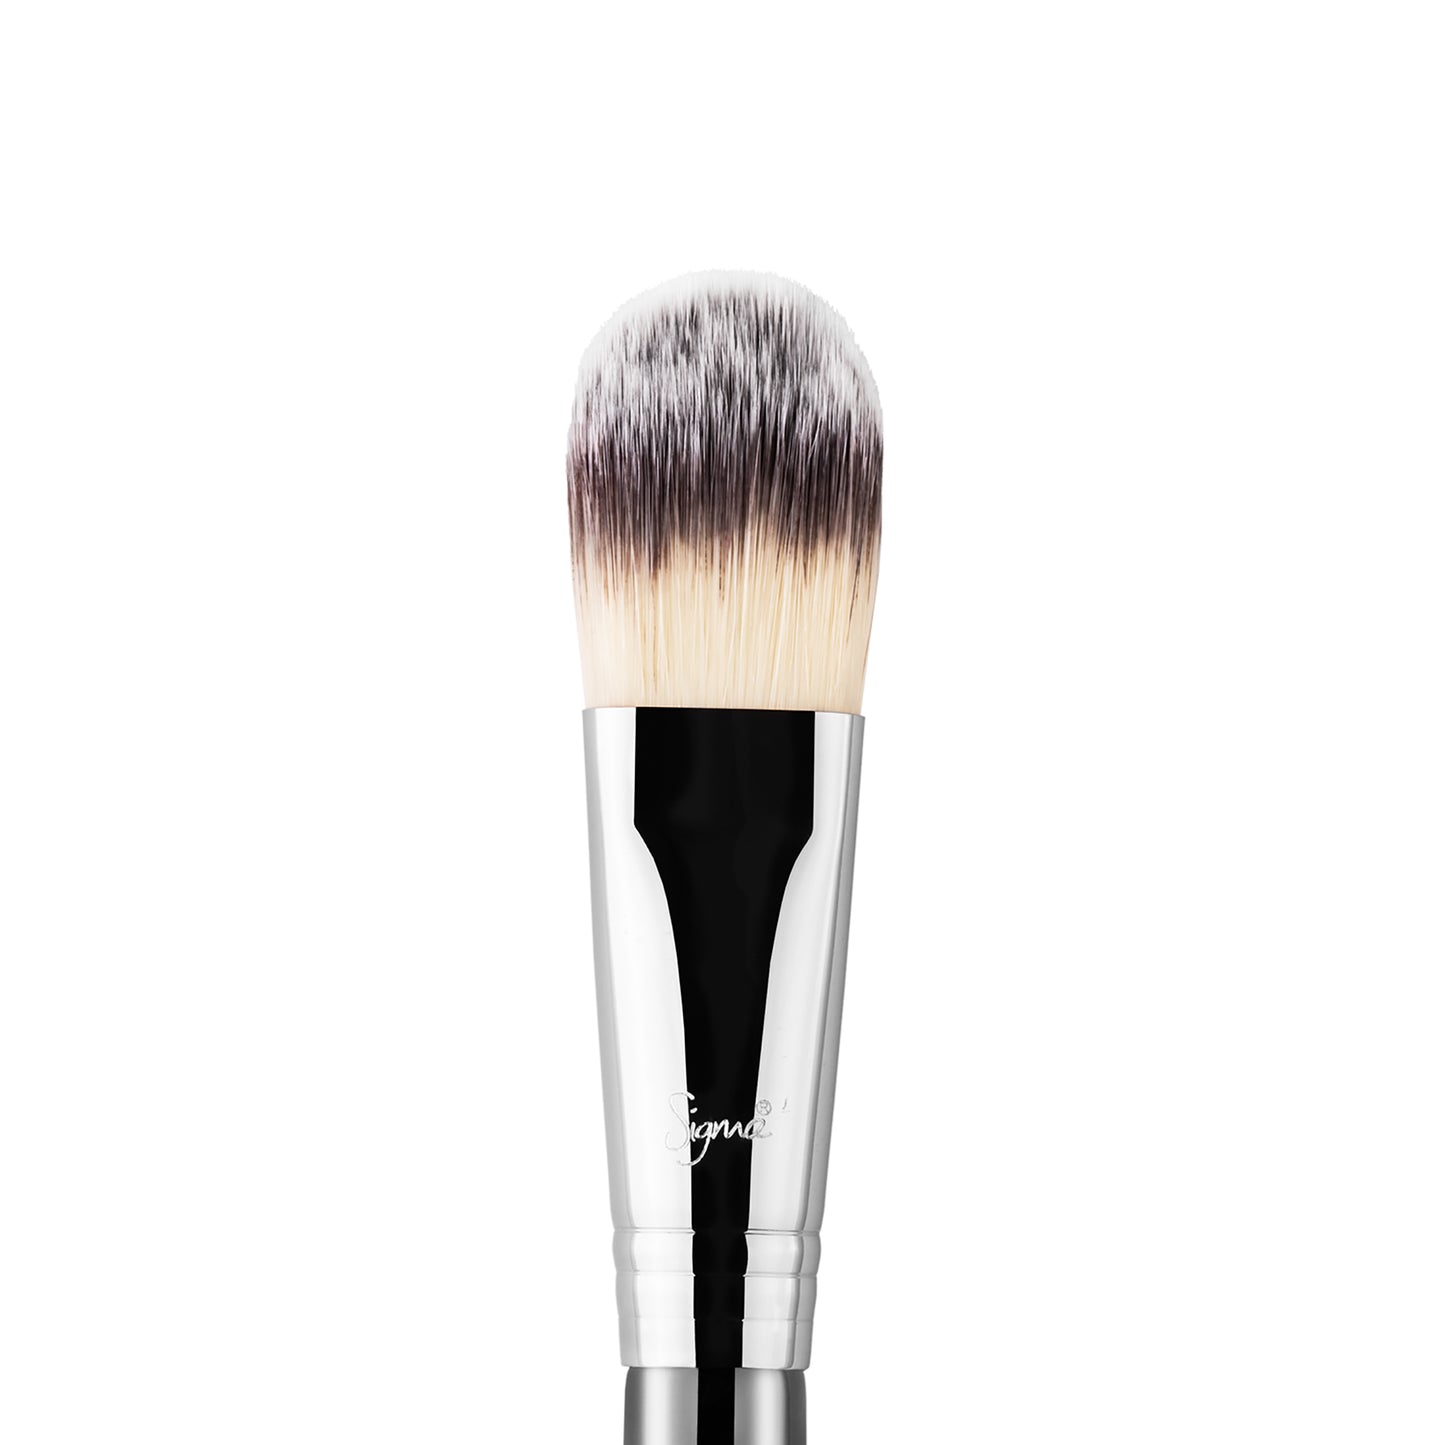 Sigma Beauty F60 Foundation Brush - Black/Chrome